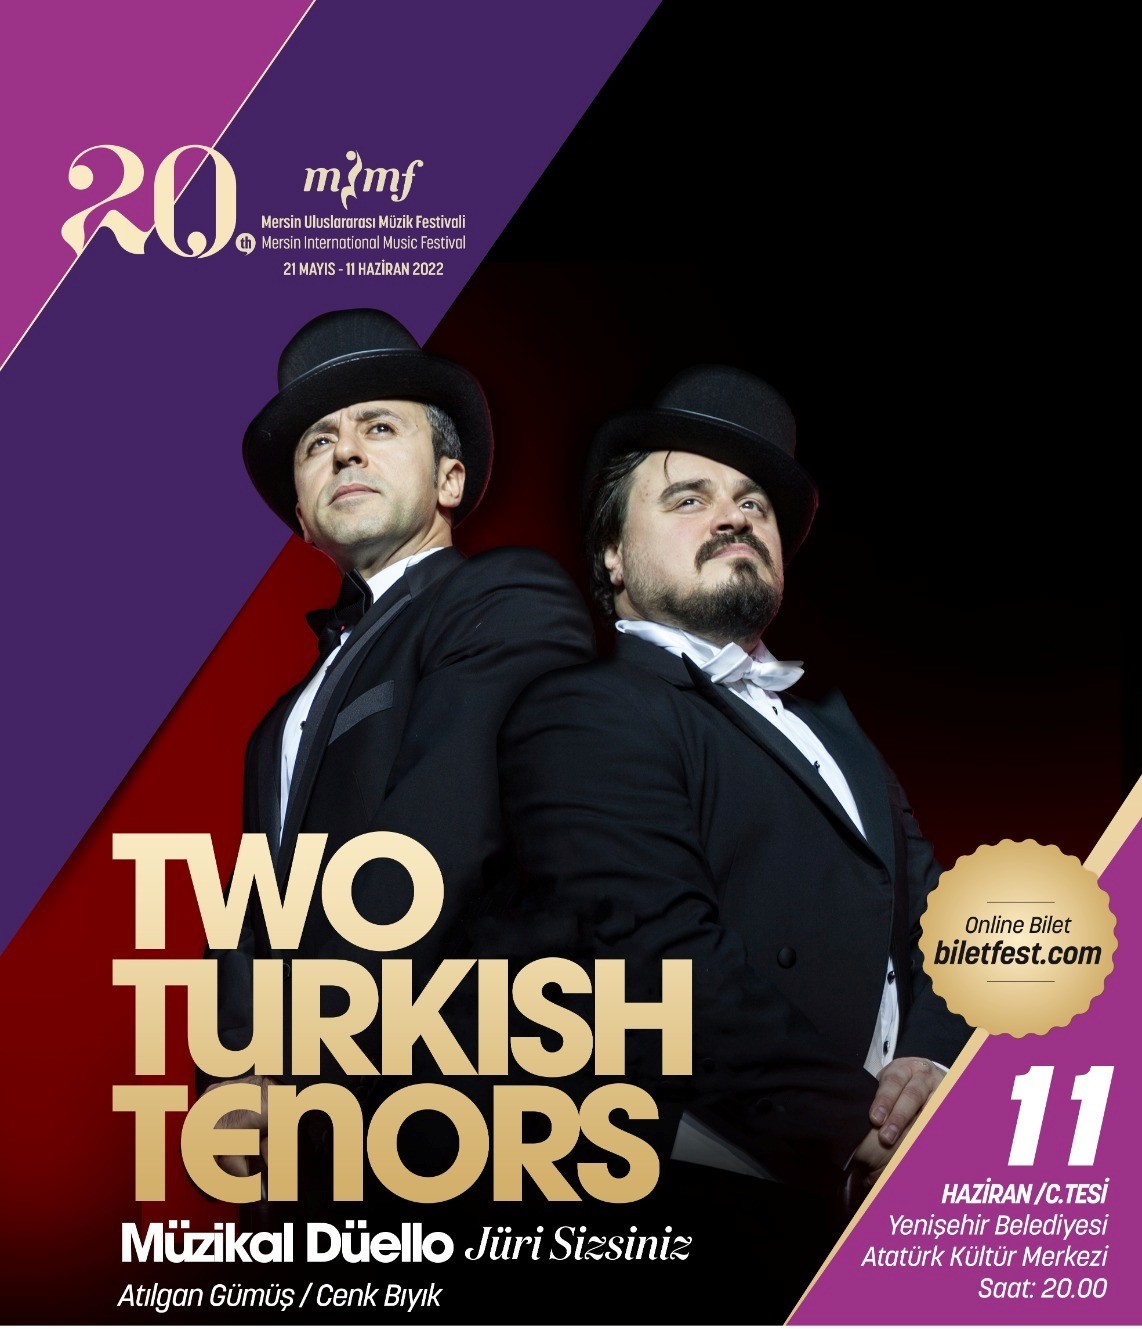 two turkish tenors muzikal duello oyunu festivalde mersinlilerle bulusacak 3b7fbbc